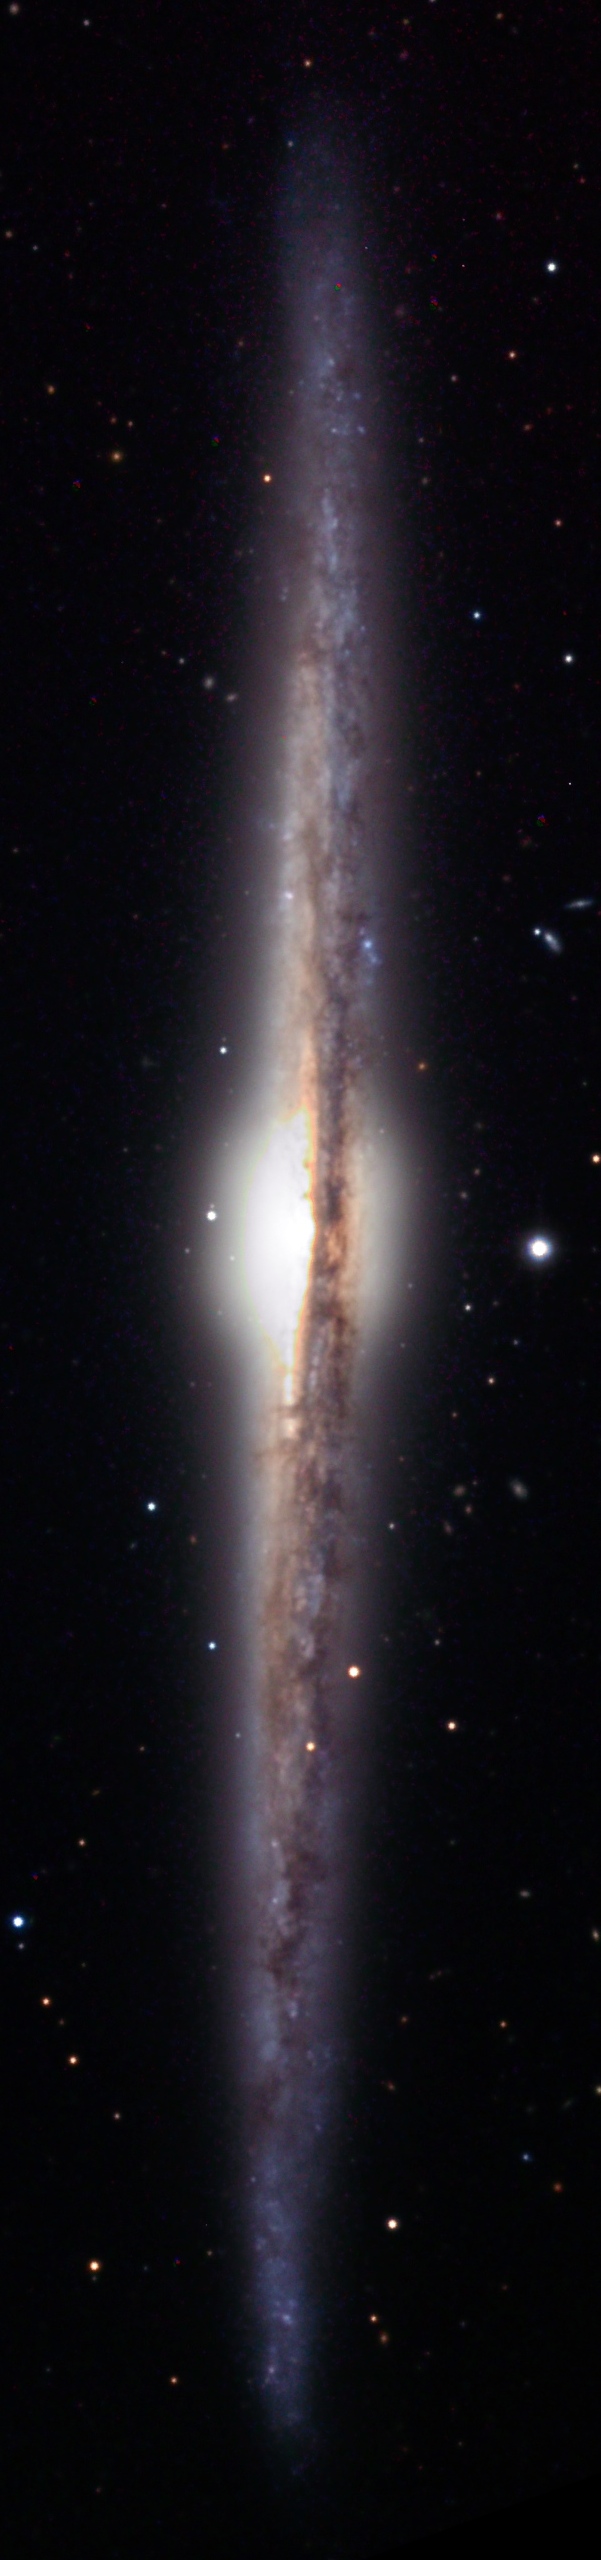 NGC 4565 by Joseph D. Schulman